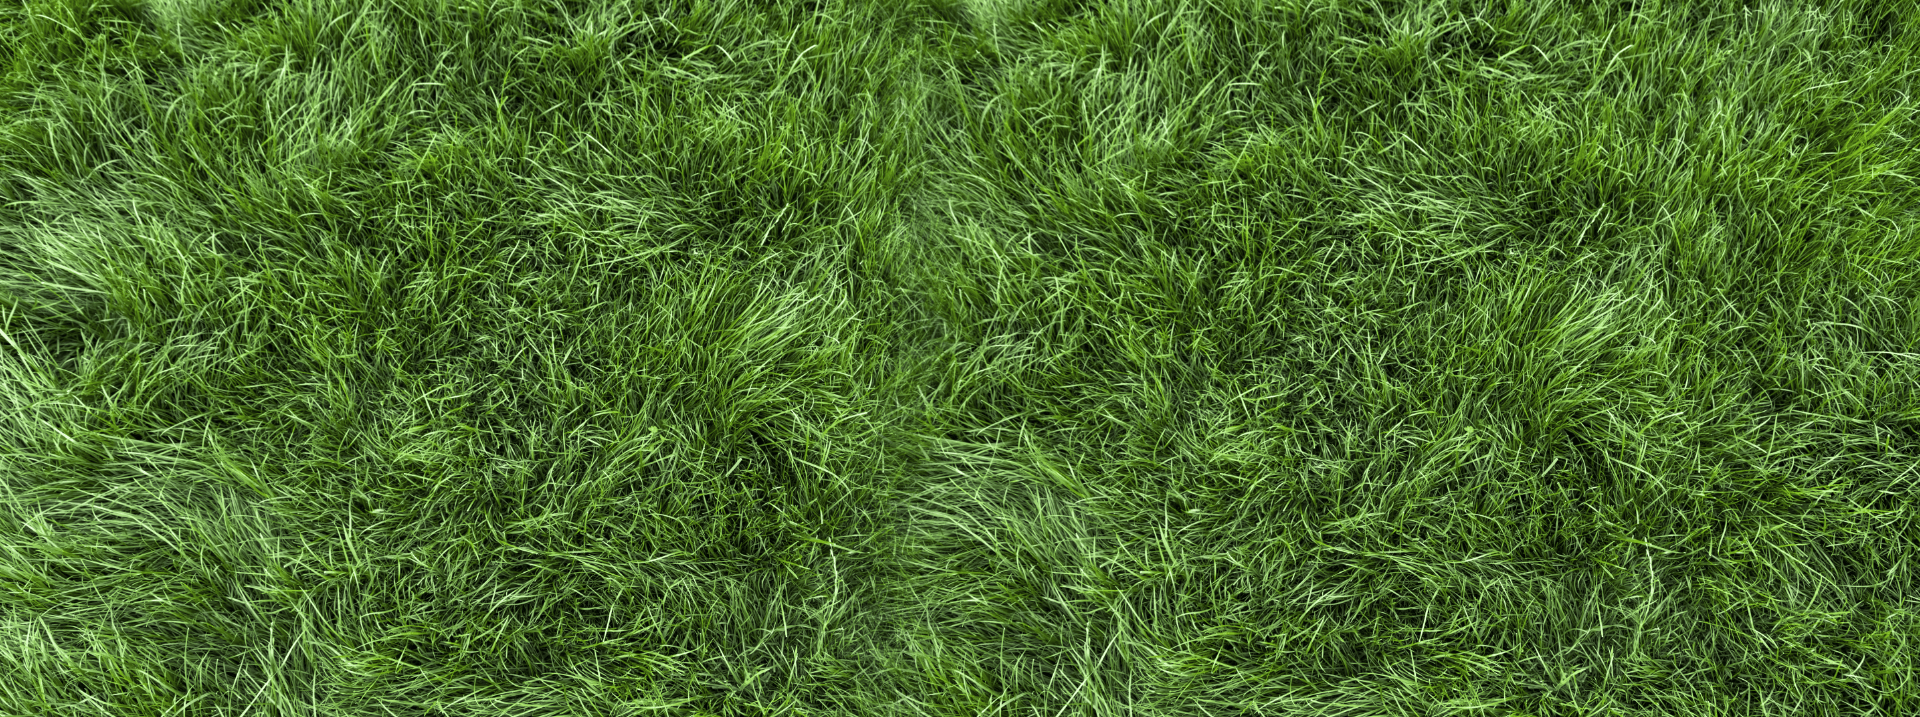 health grass